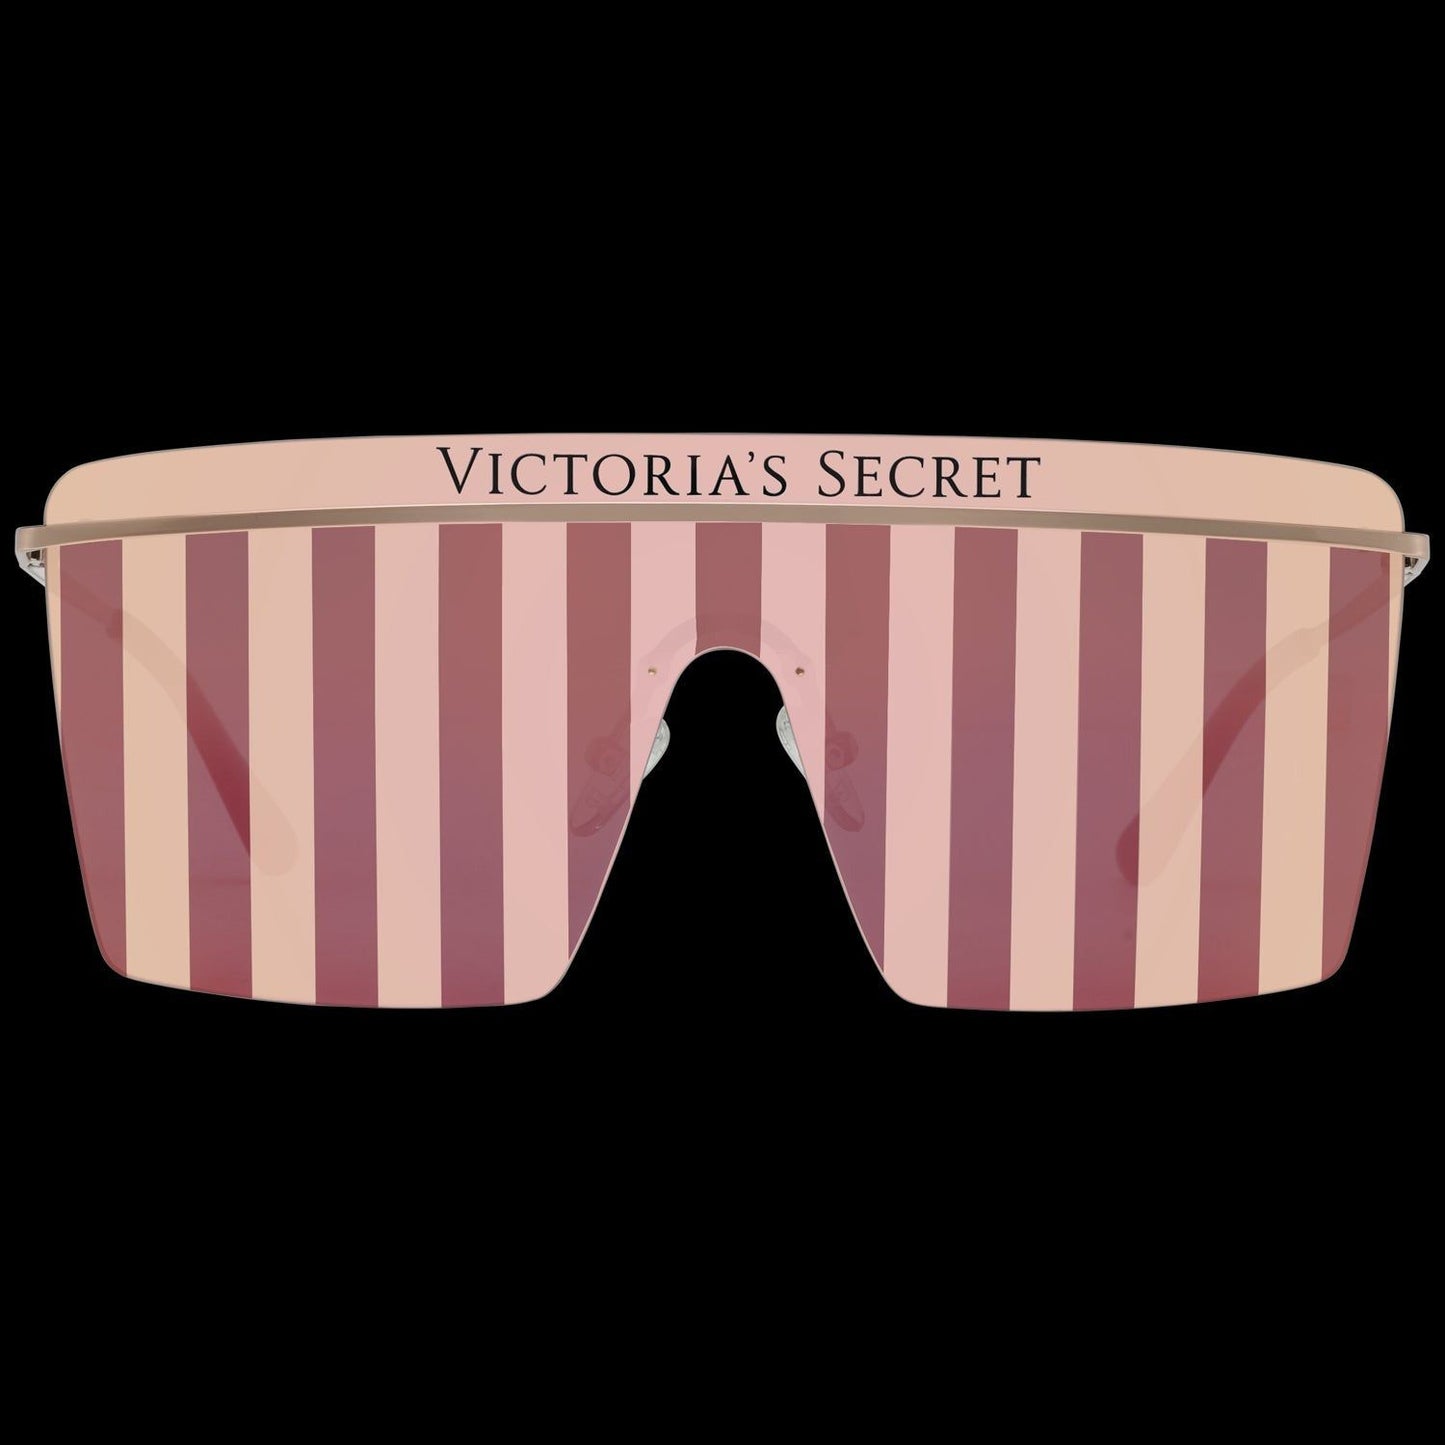 VICTORIA'S SECRET SUNGLASSES VICTORIAS SECRET SUNGLASSES SUNGLASSES & EYEWEAR victorias-secret-sunglasses-3